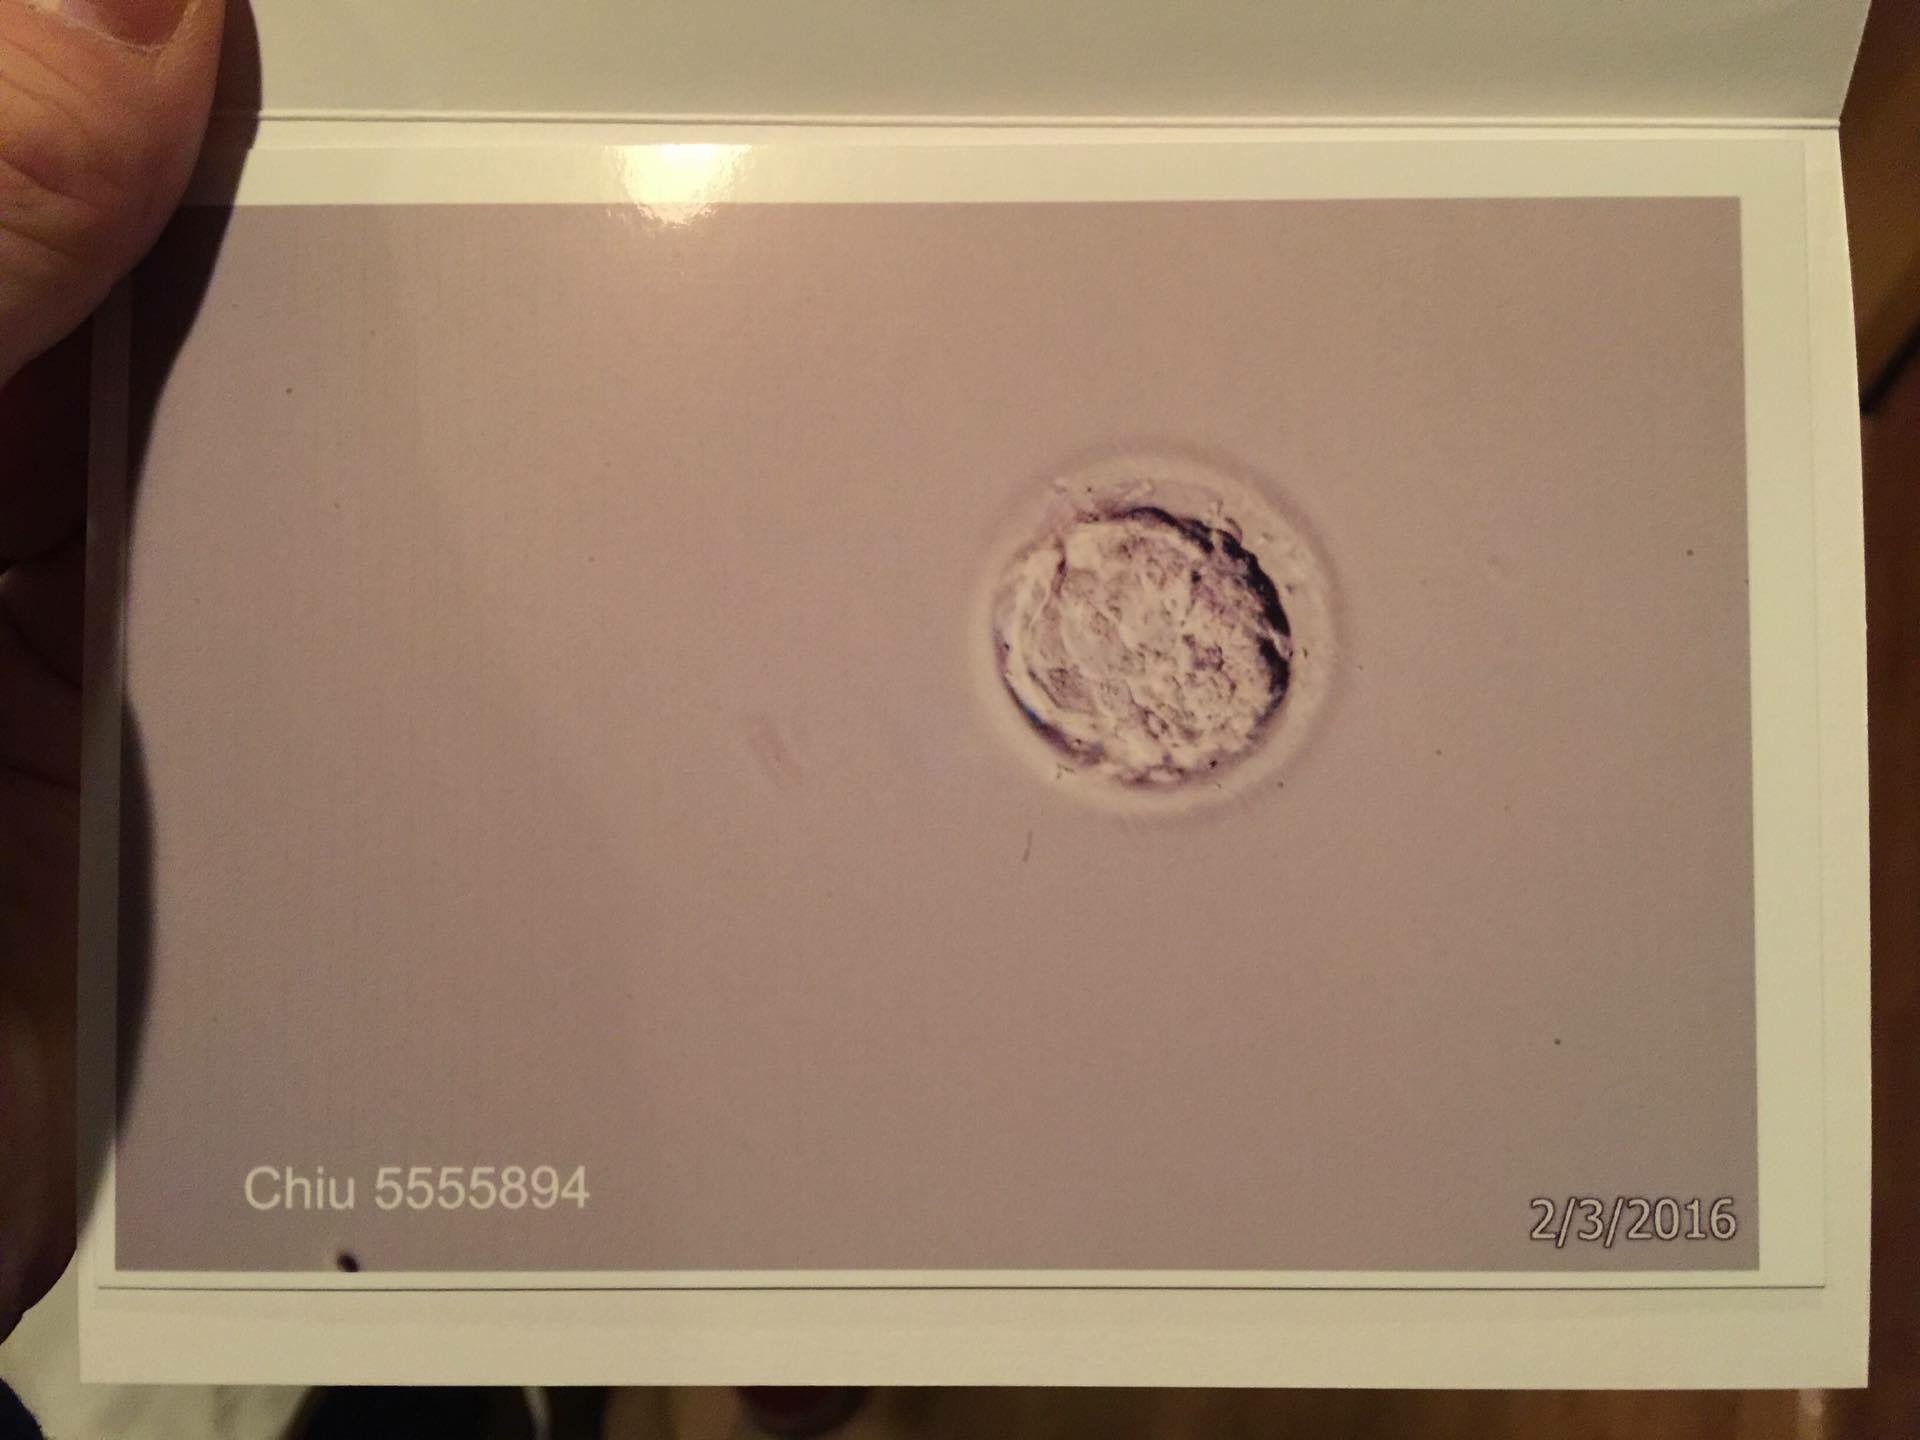 Embryo Picture